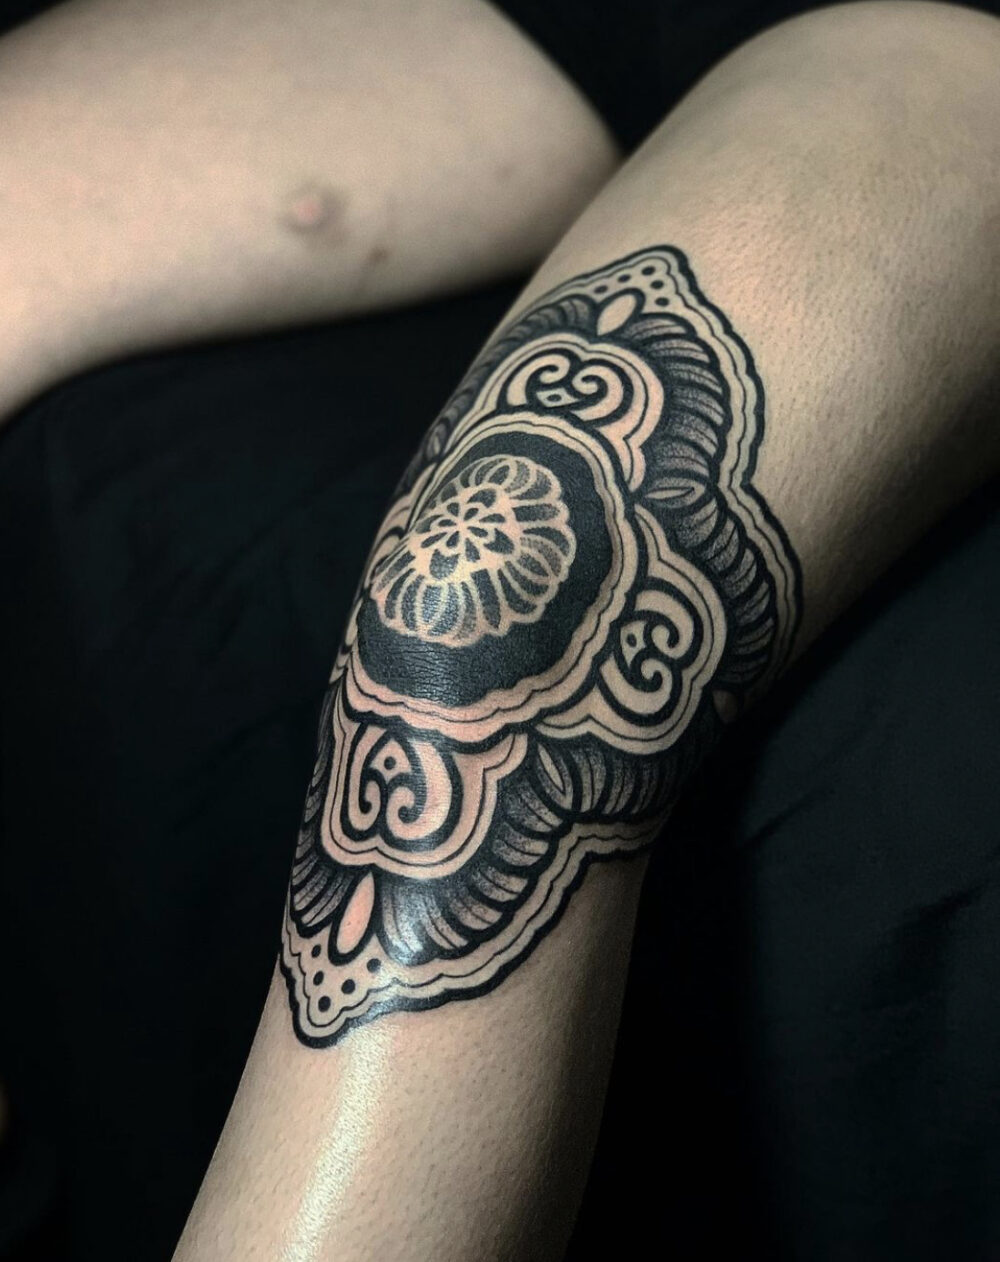 Mandala Tattoos, creative relaxation as skin art - Tattoo Life